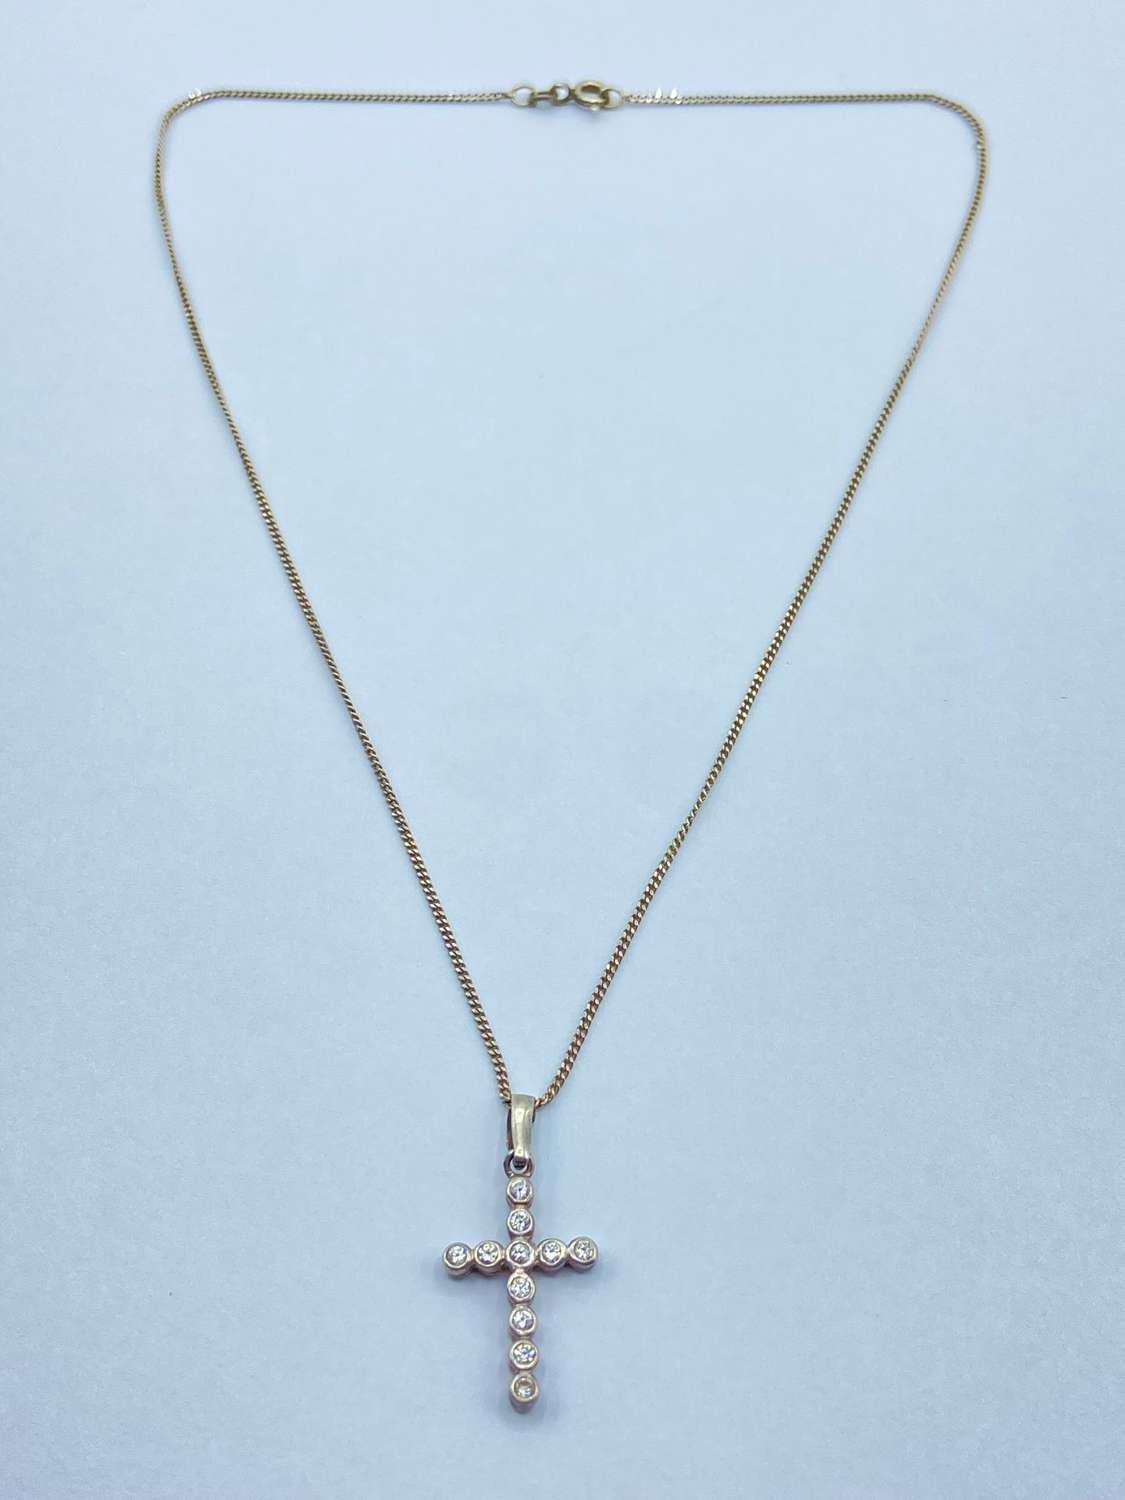 Vintage Sterling Silver & Cubic Zirconia Cross Necklace Pendant